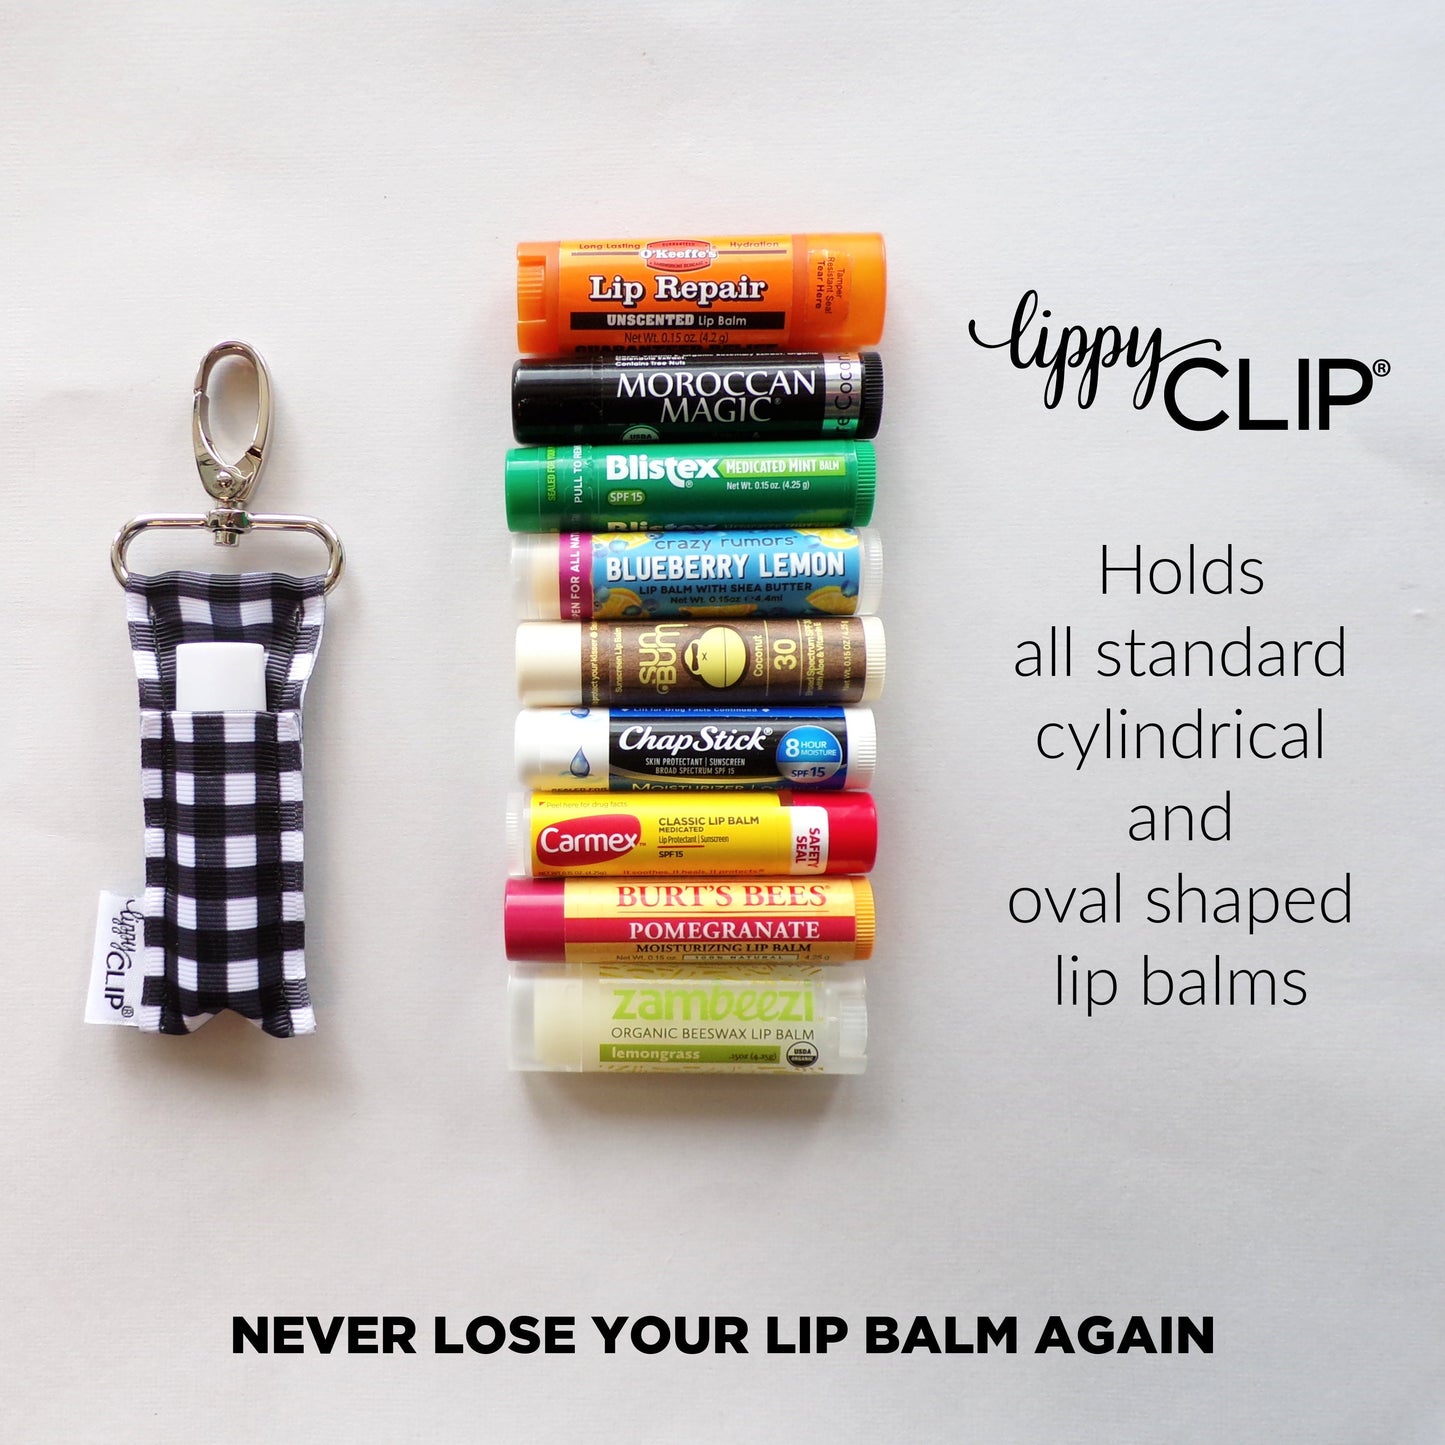 Team USA LippyClip® Lip Balm Holder